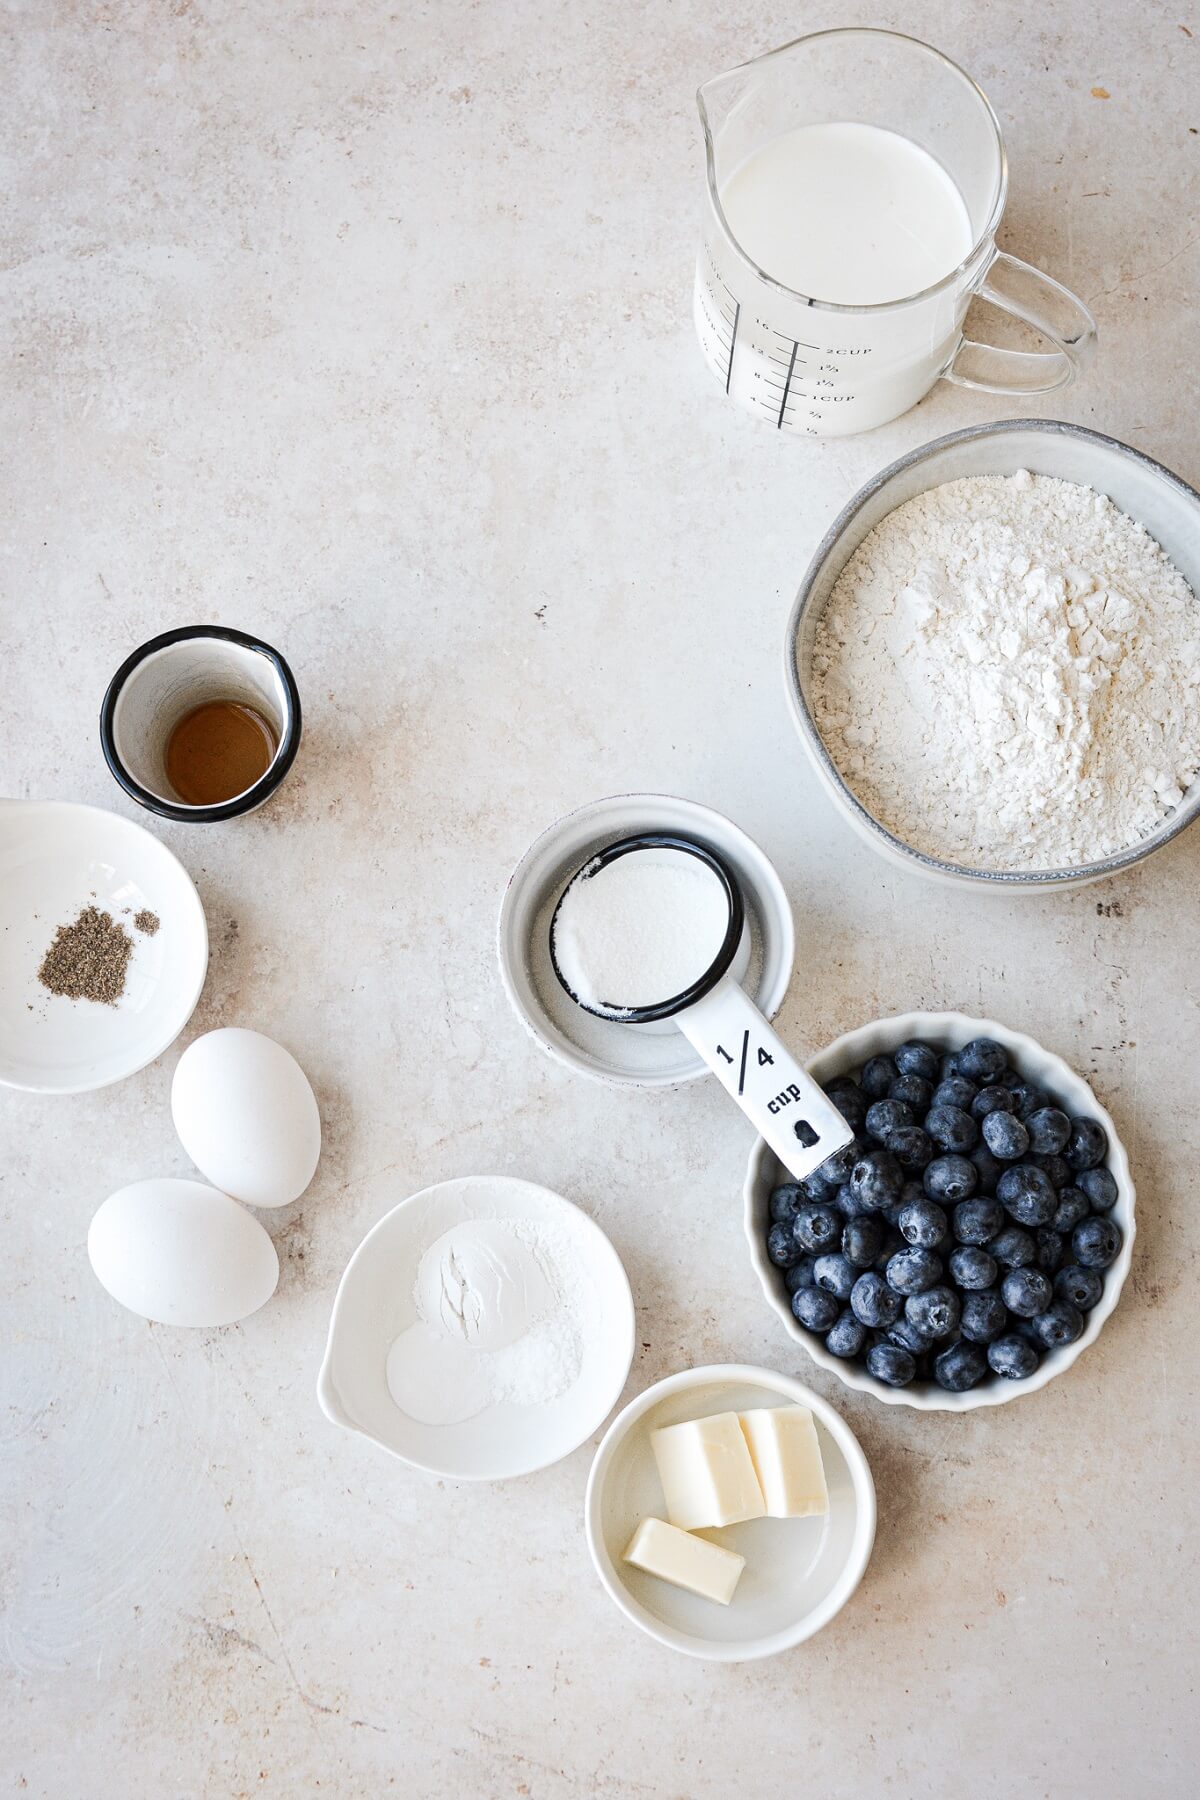 Ingredients for making blueberry pancakes.